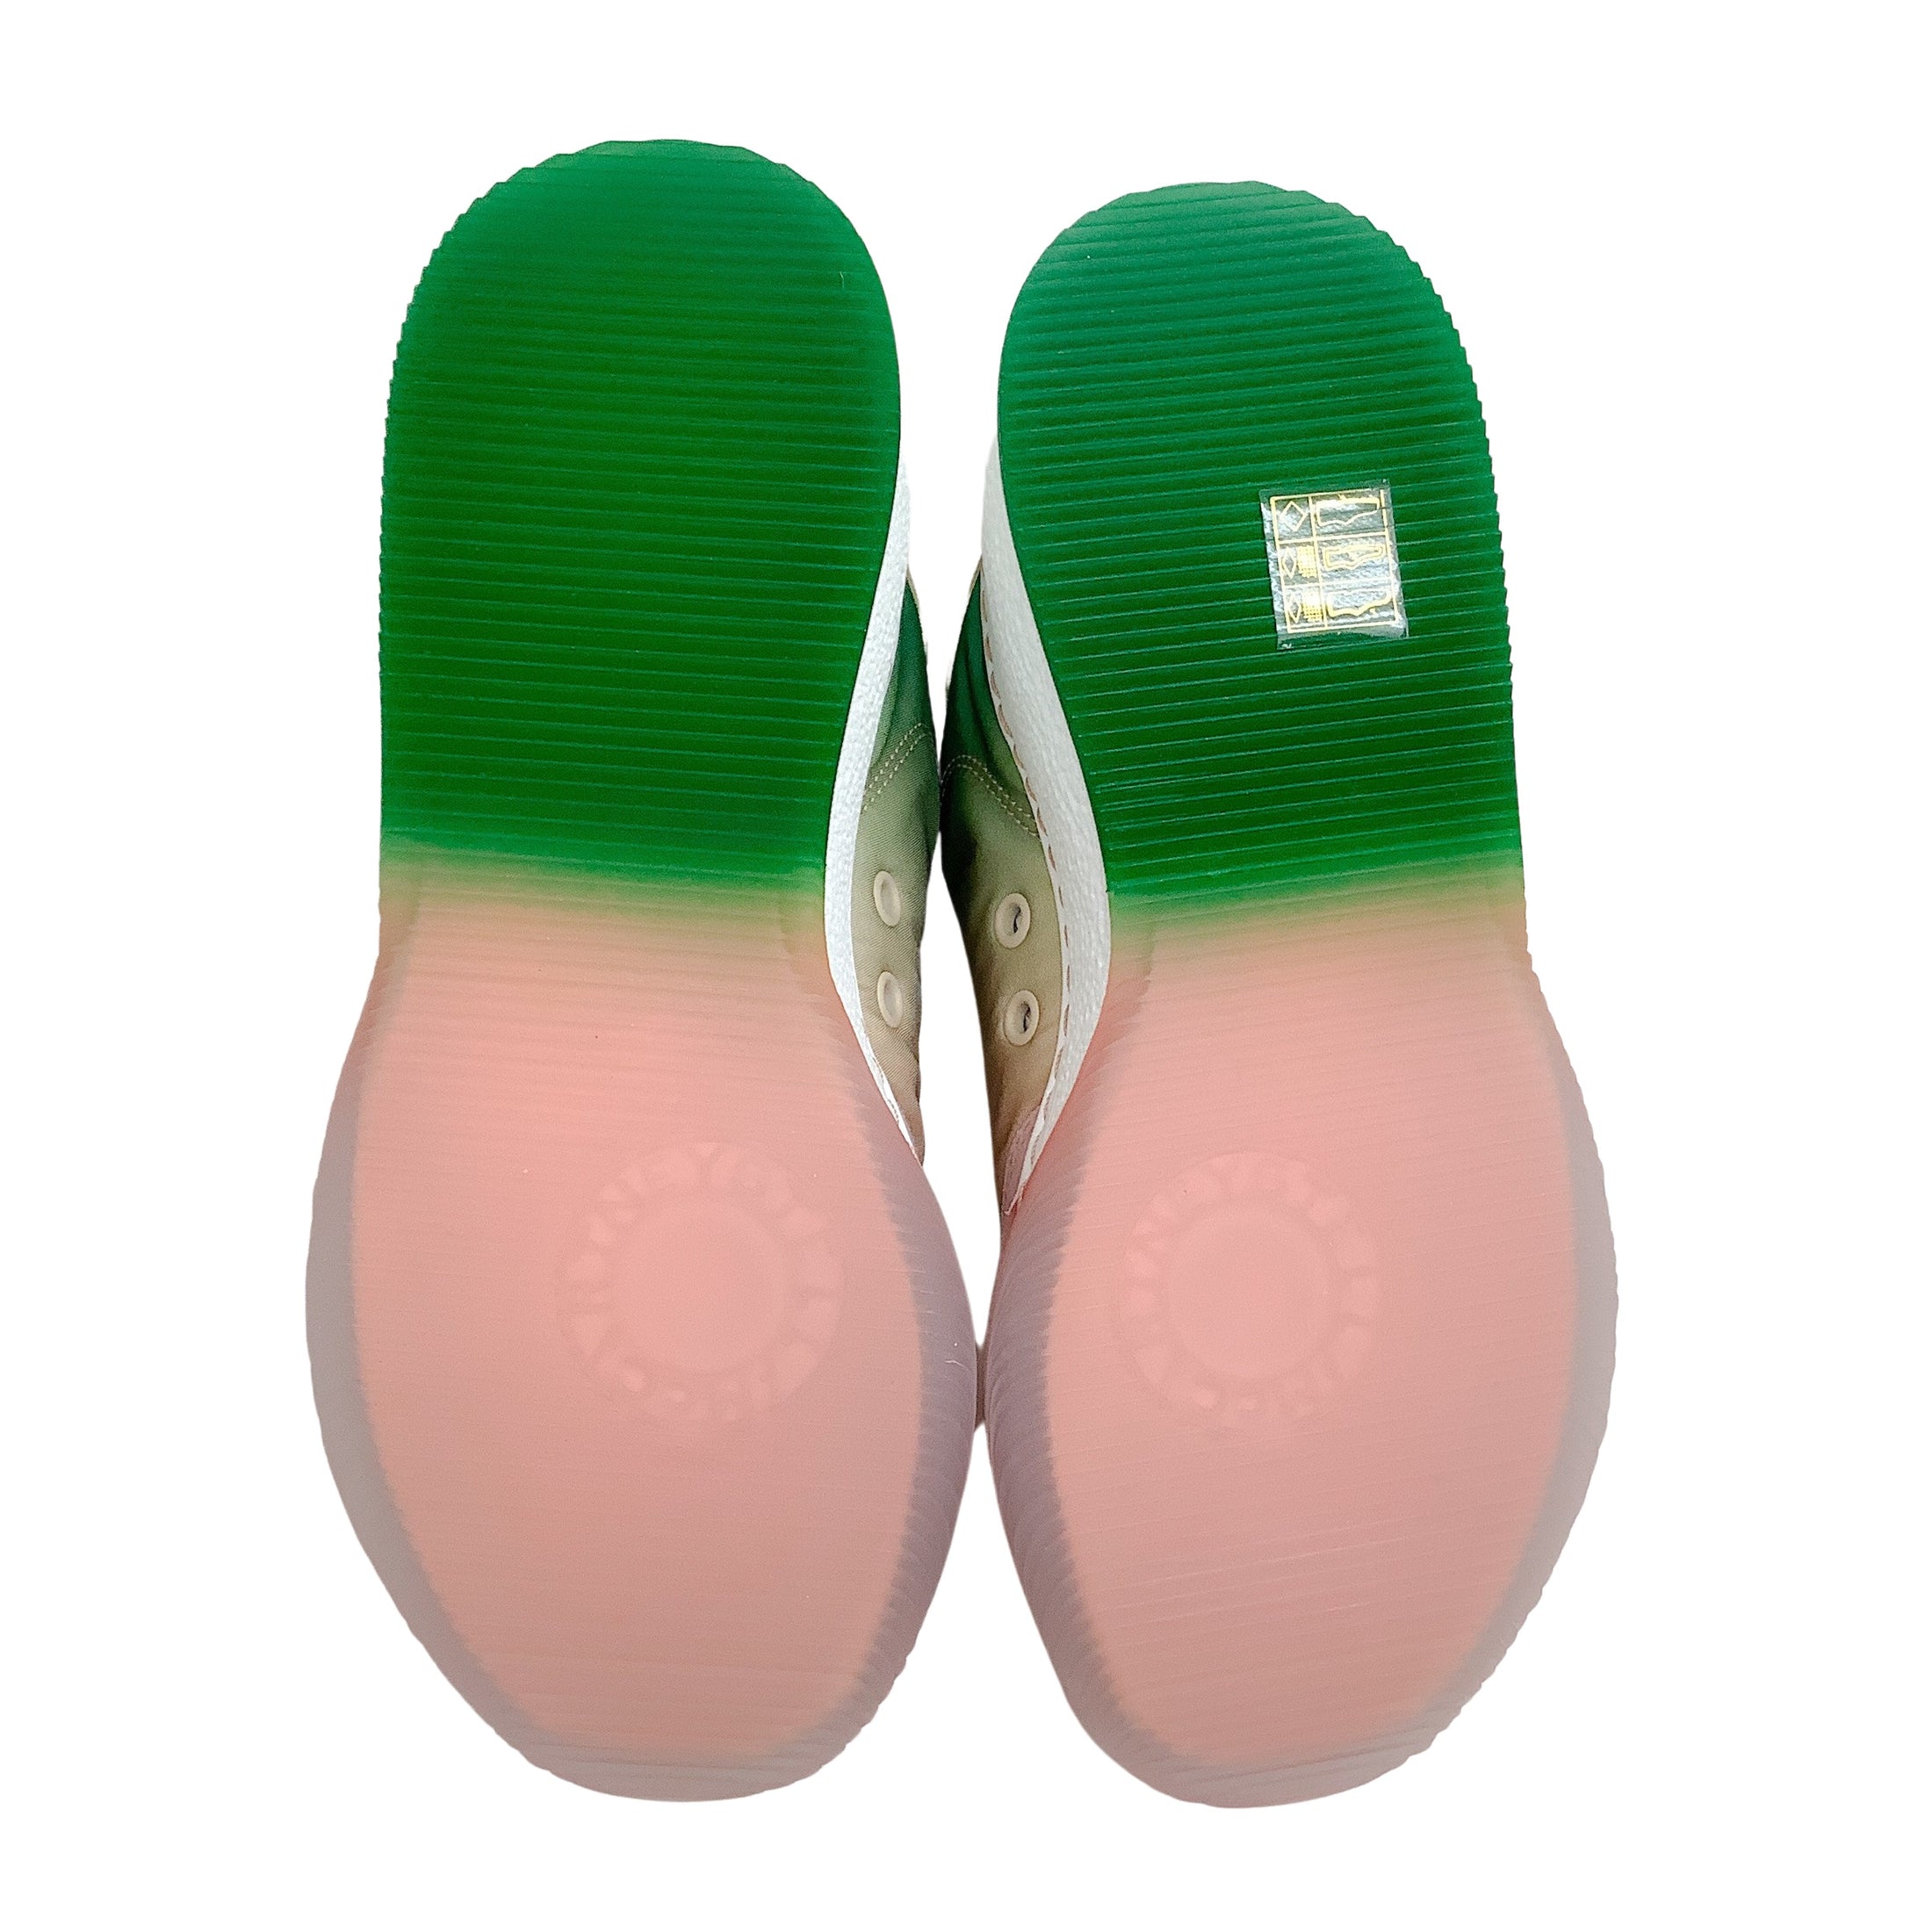 Stella McCartney Peach / Green Gradient Sneakers